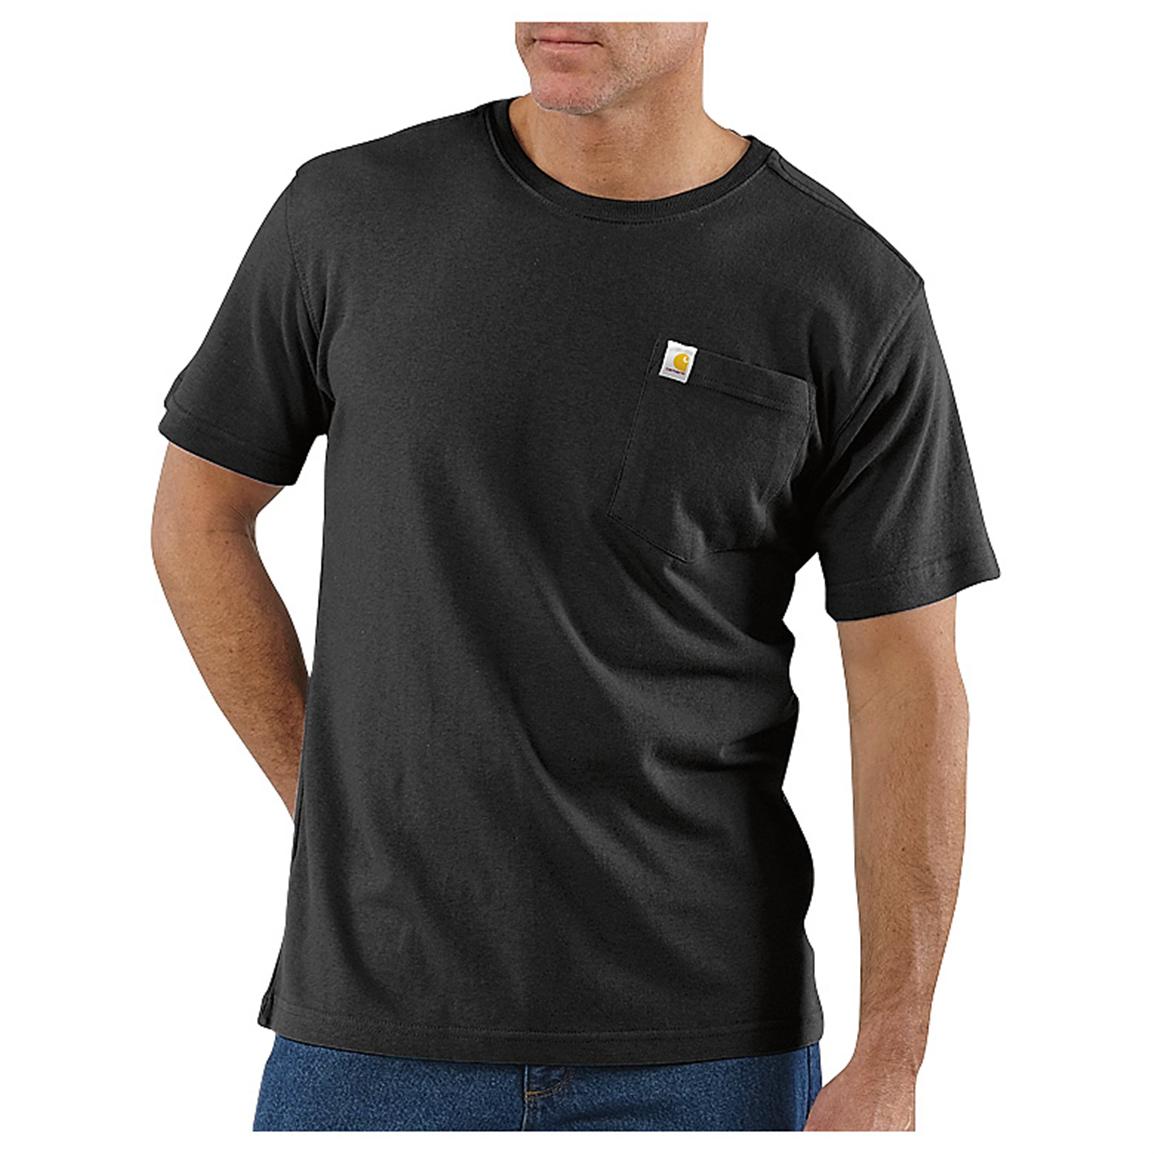 Carhartt® Pocket T-shirt - 285011, T-Shirts at Sportsman's Guide